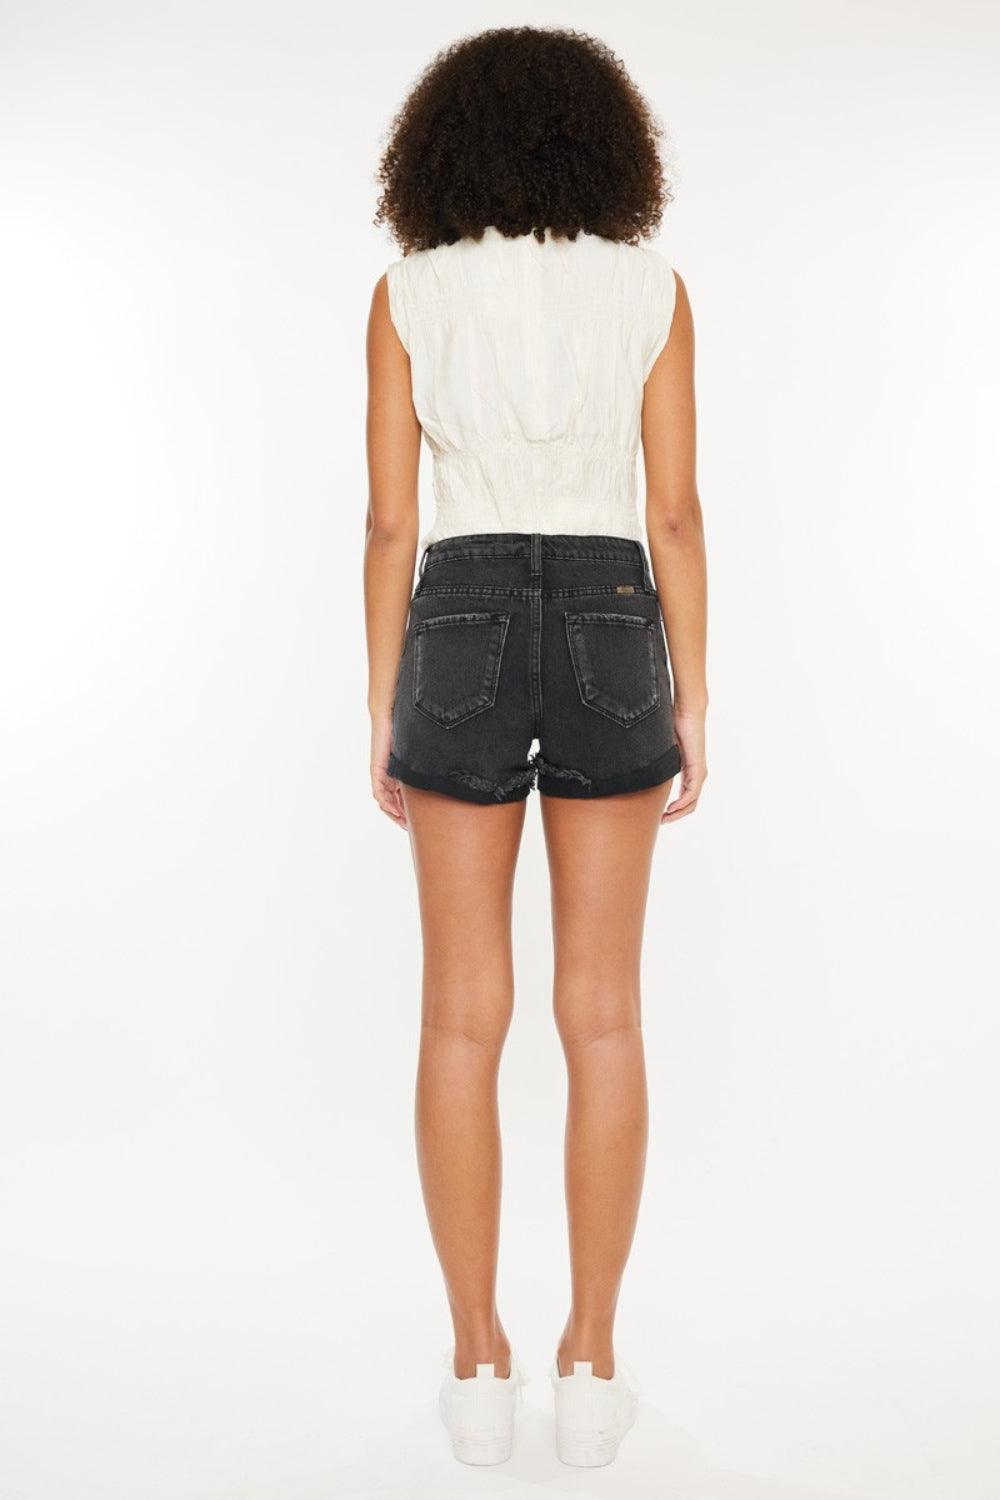 Kancan High Waist Distressed Denim Shorts - Jessiz Boutique